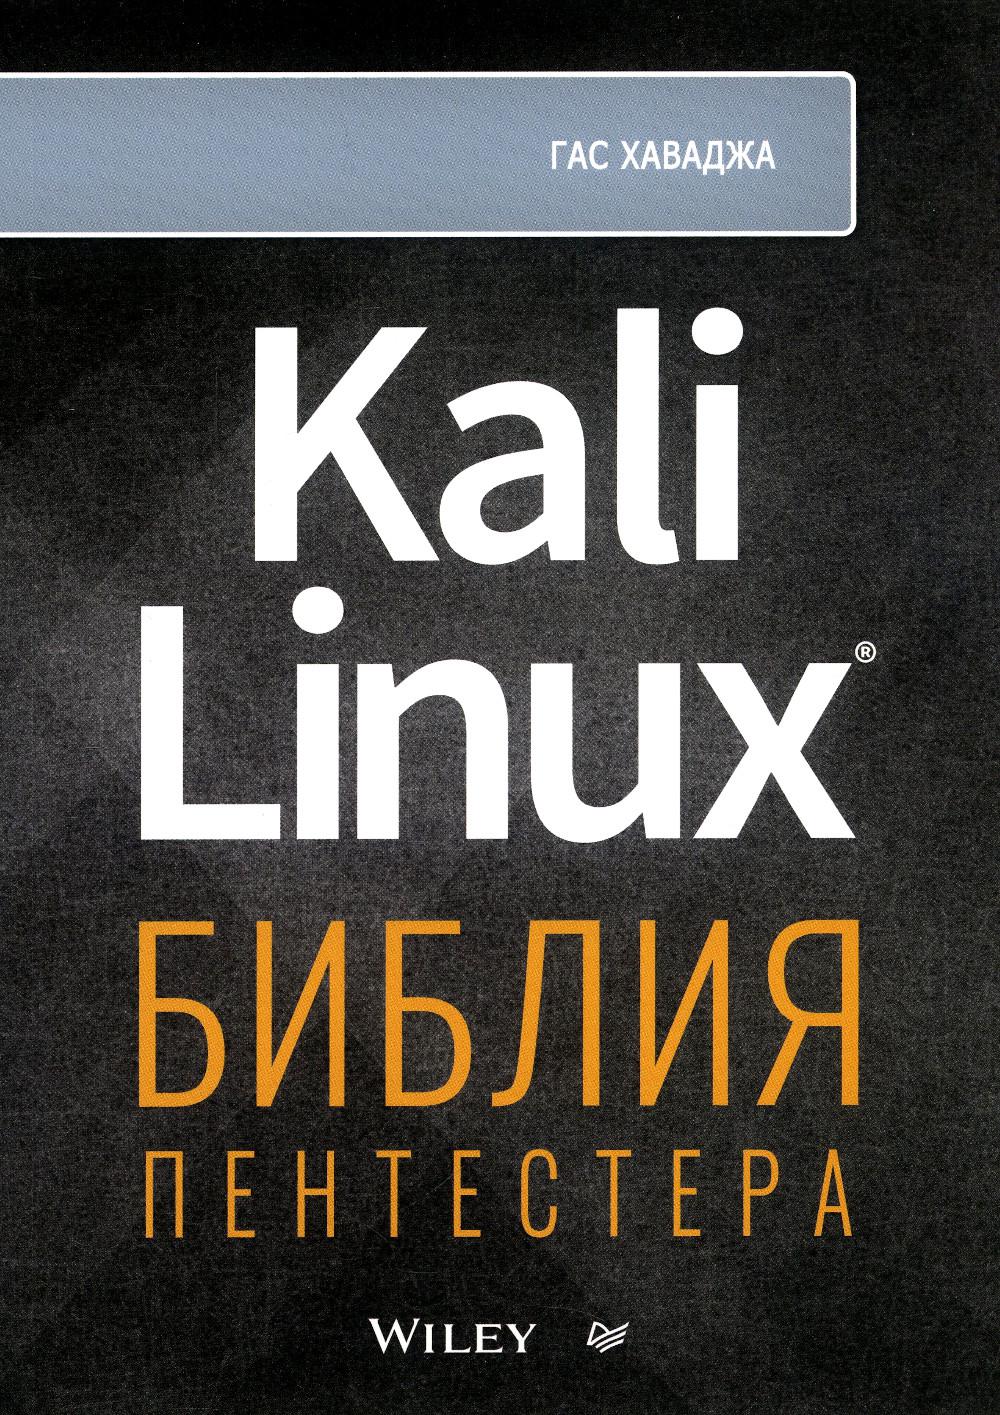 Kali Linux: библия пентестера